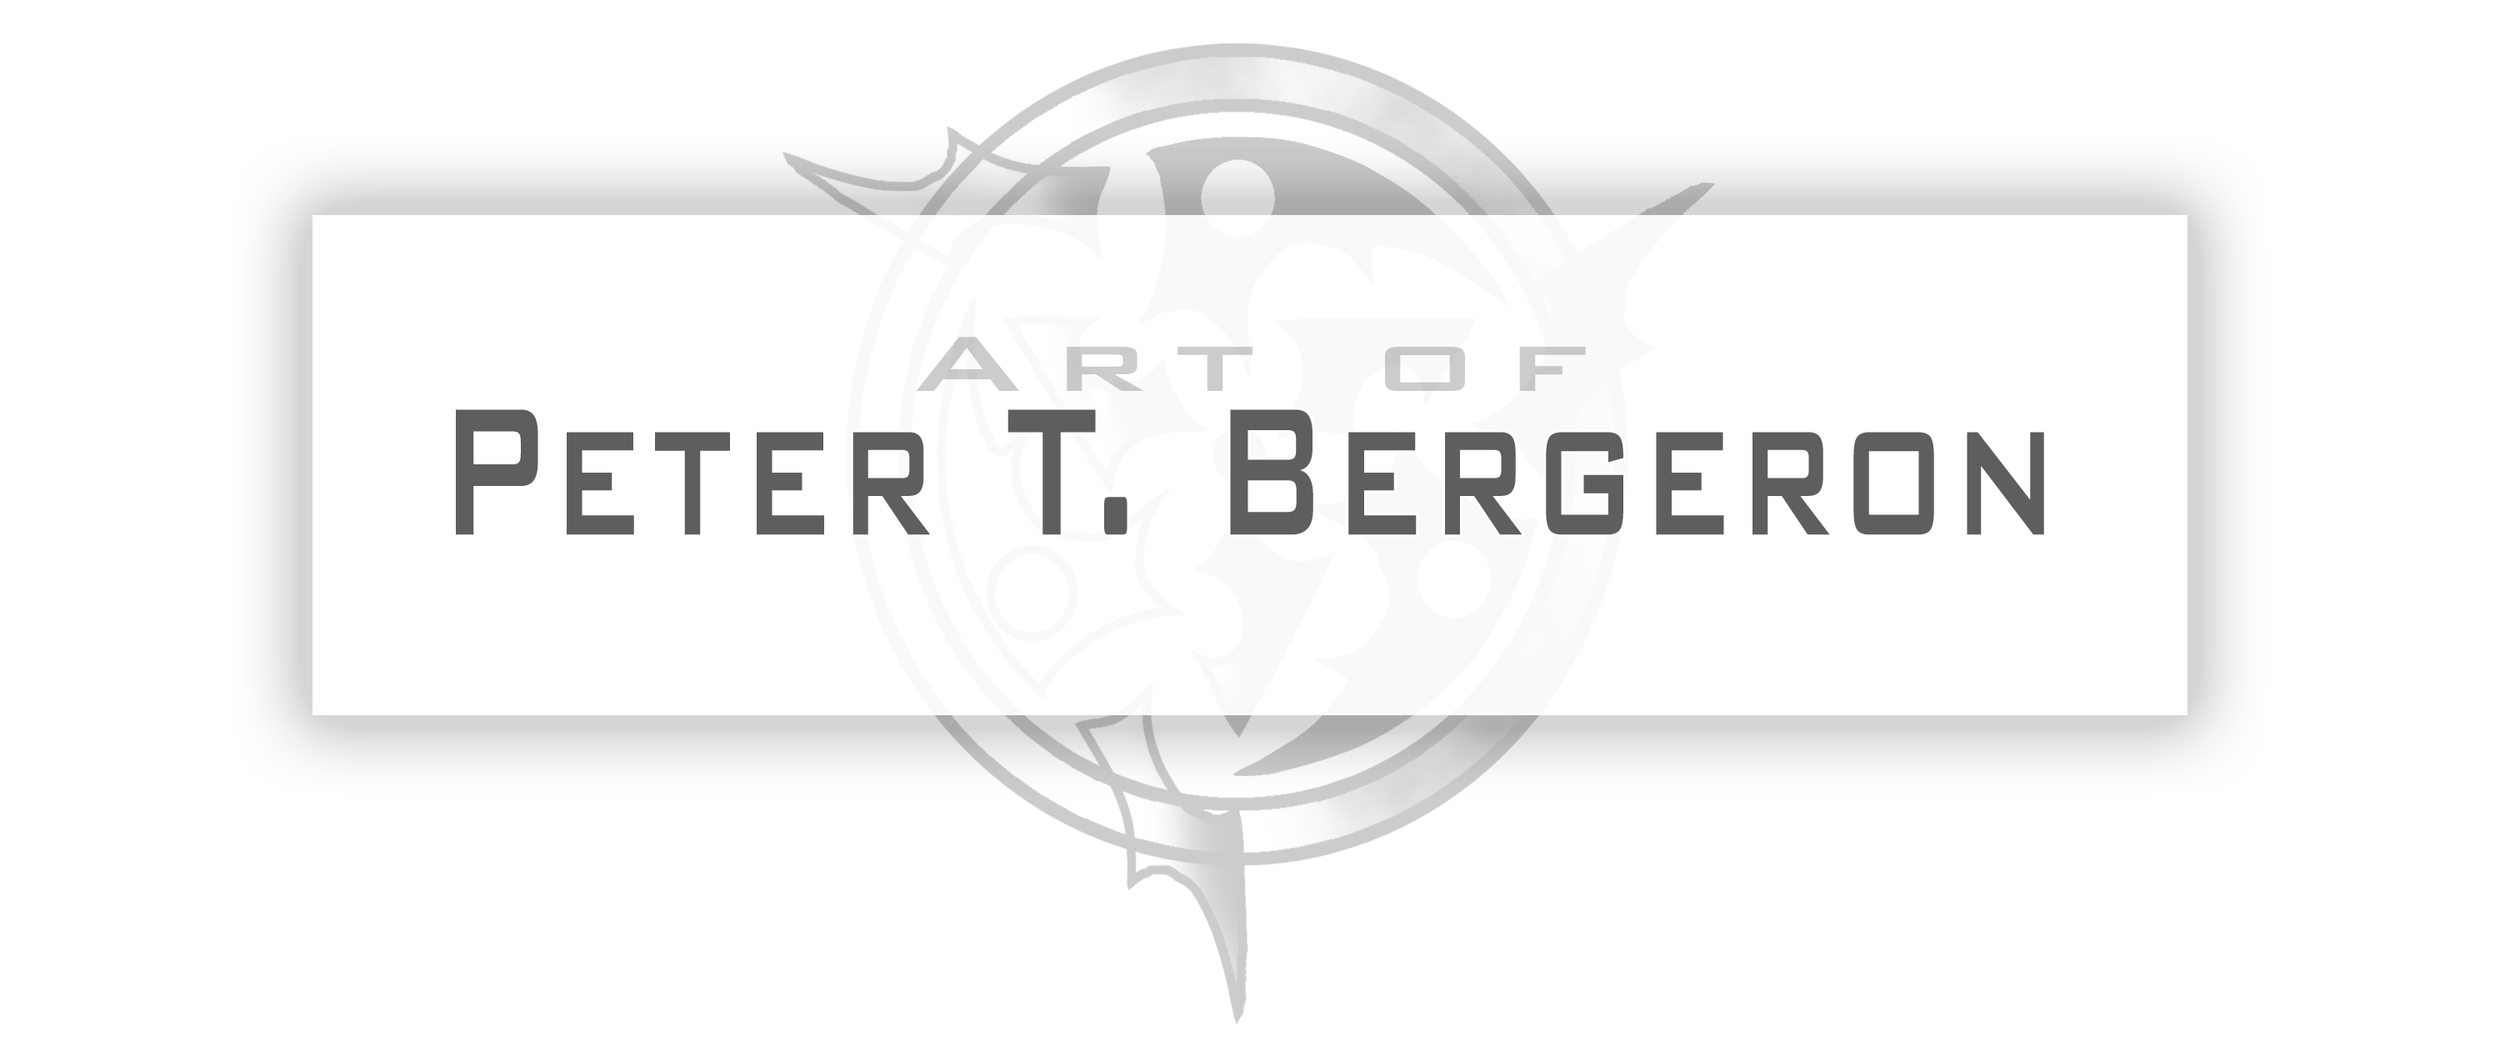 Art of Peter T. Bergeron